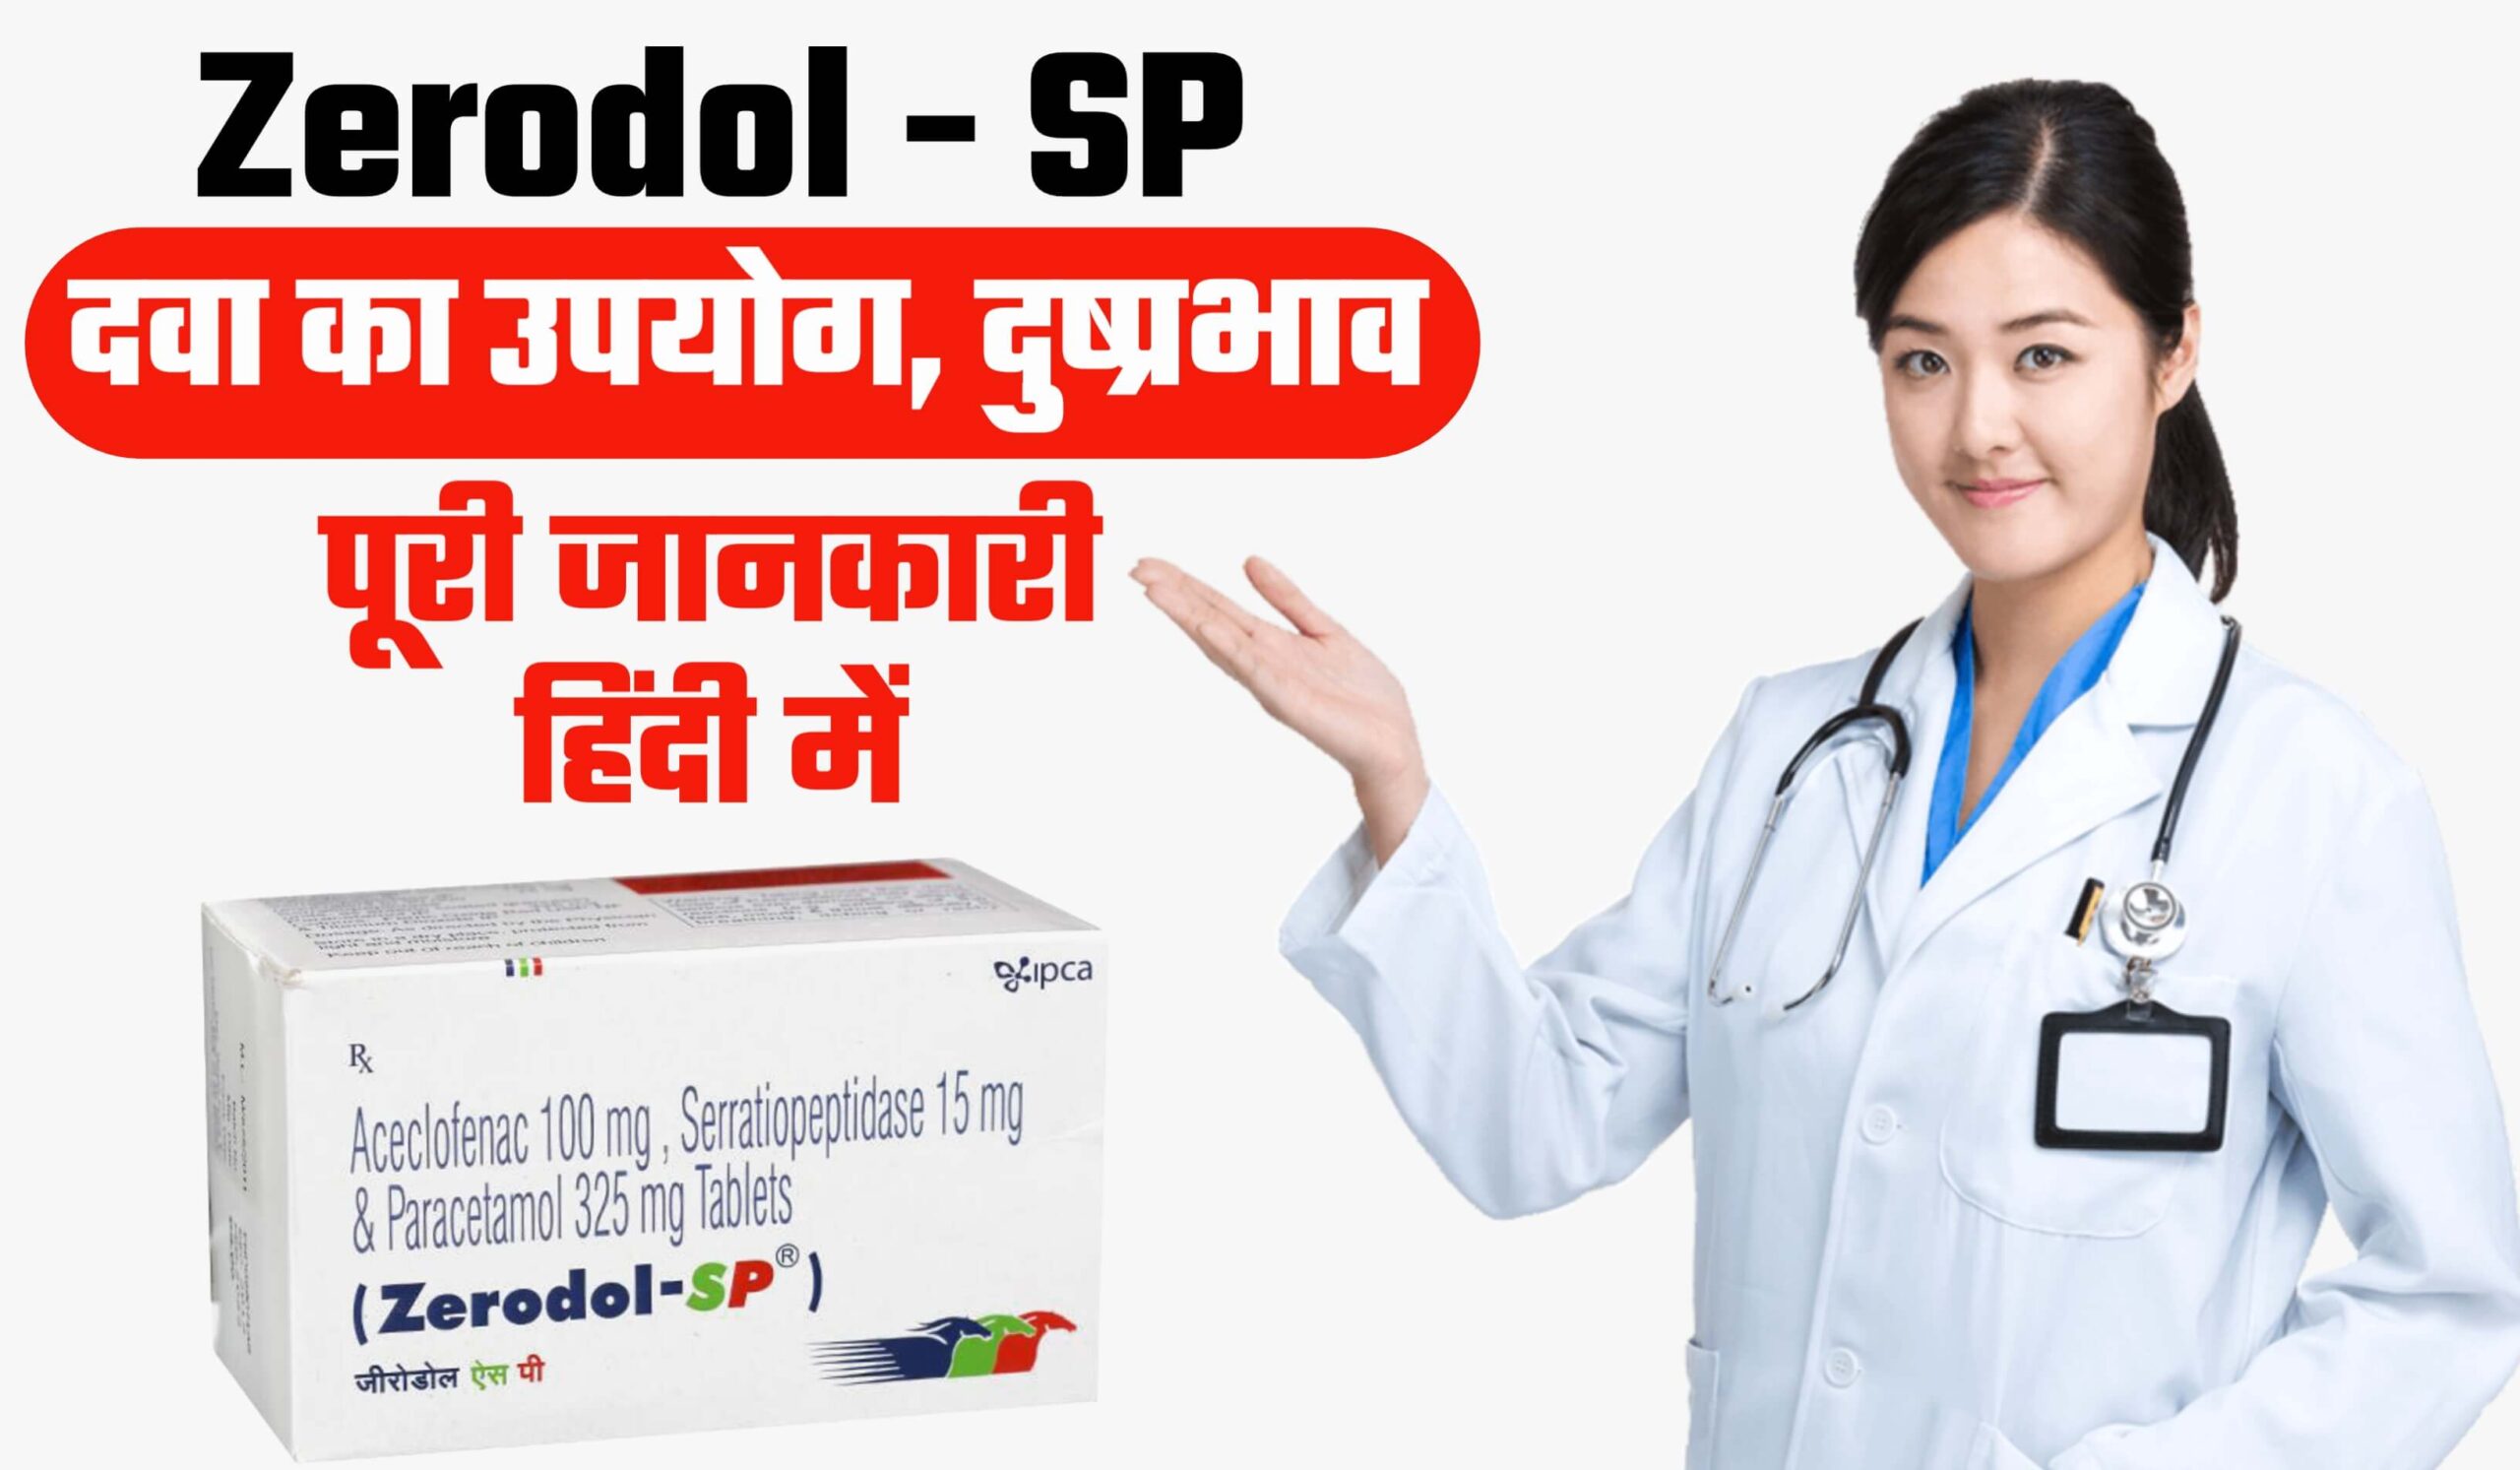 zerodol sp uses in hindi, Zerodol SP uses in hindi, Zerodol P